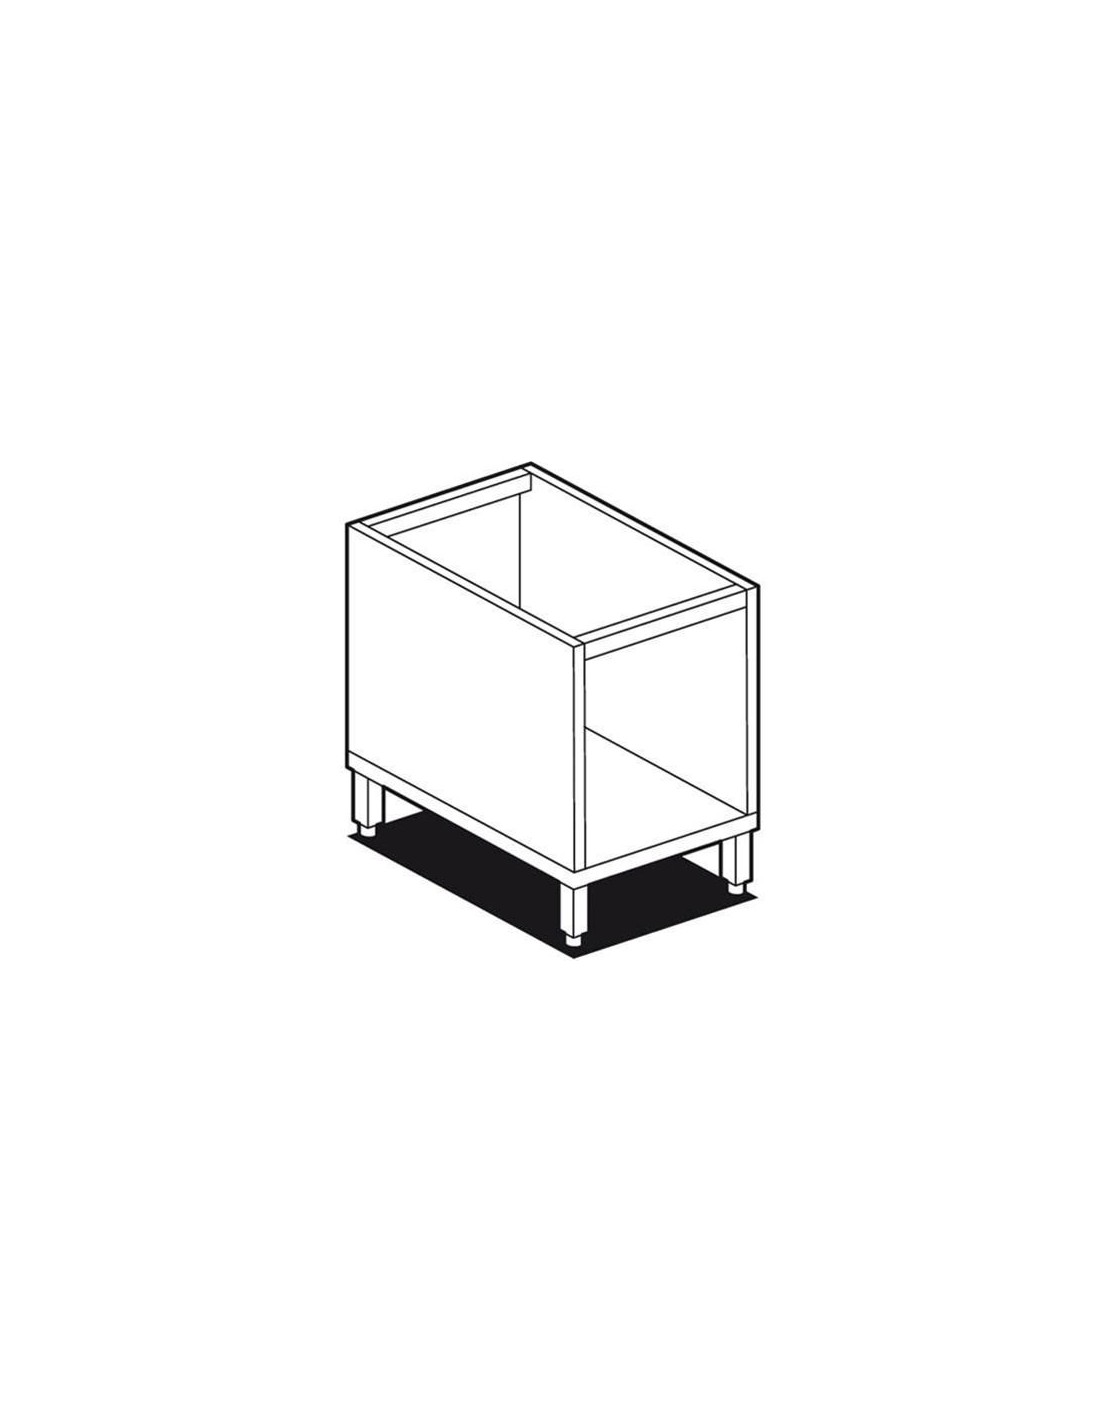 Open base cabinet - Dimensions cm 30 x 40 x 60 h